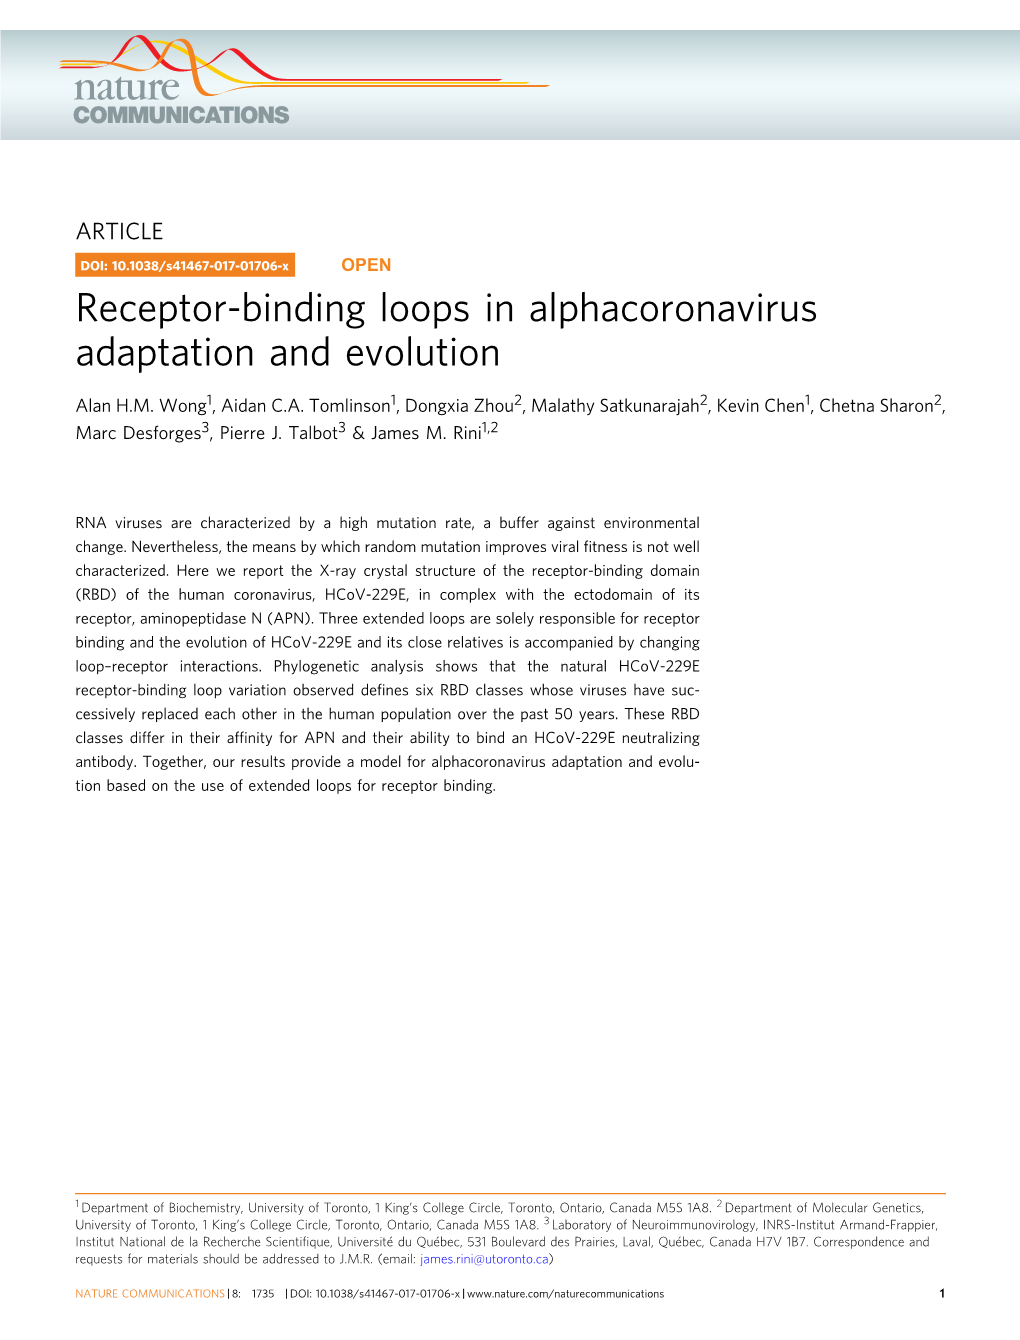 Receptor-Binding Loops in Alphacoronavirus Adaptation and Evolution